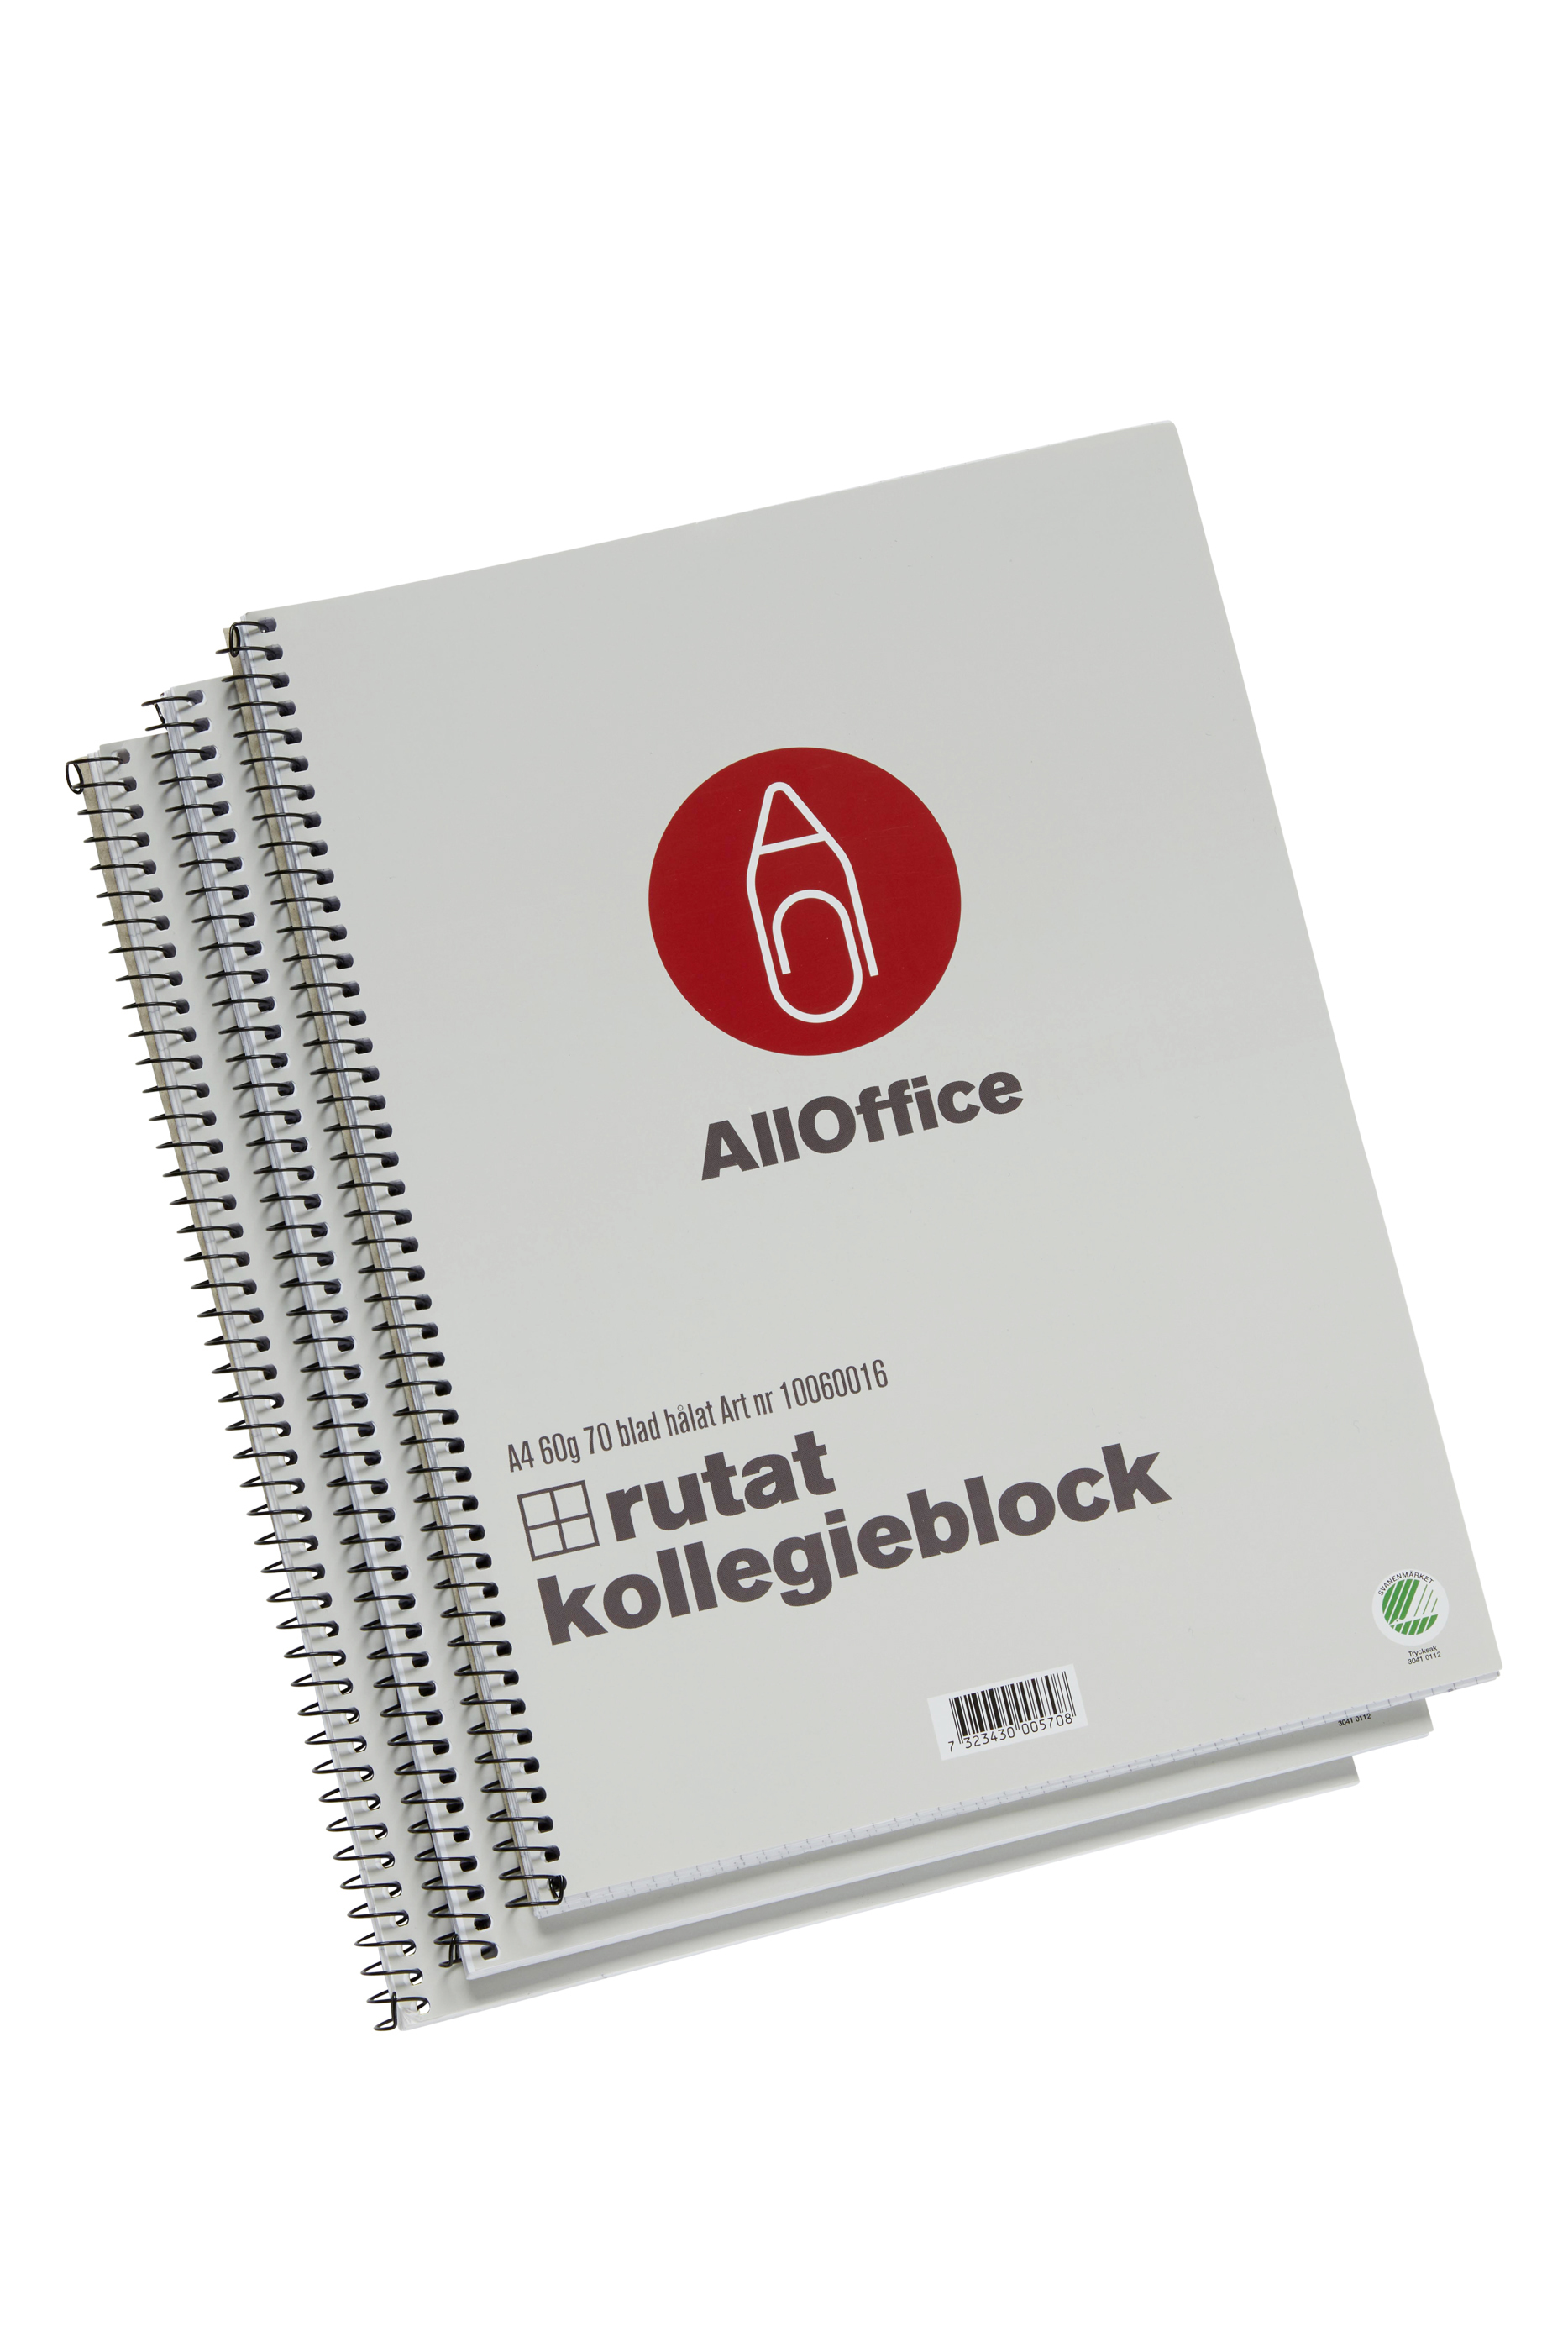 Kollegieblock AllOffice rutat A4 10060067